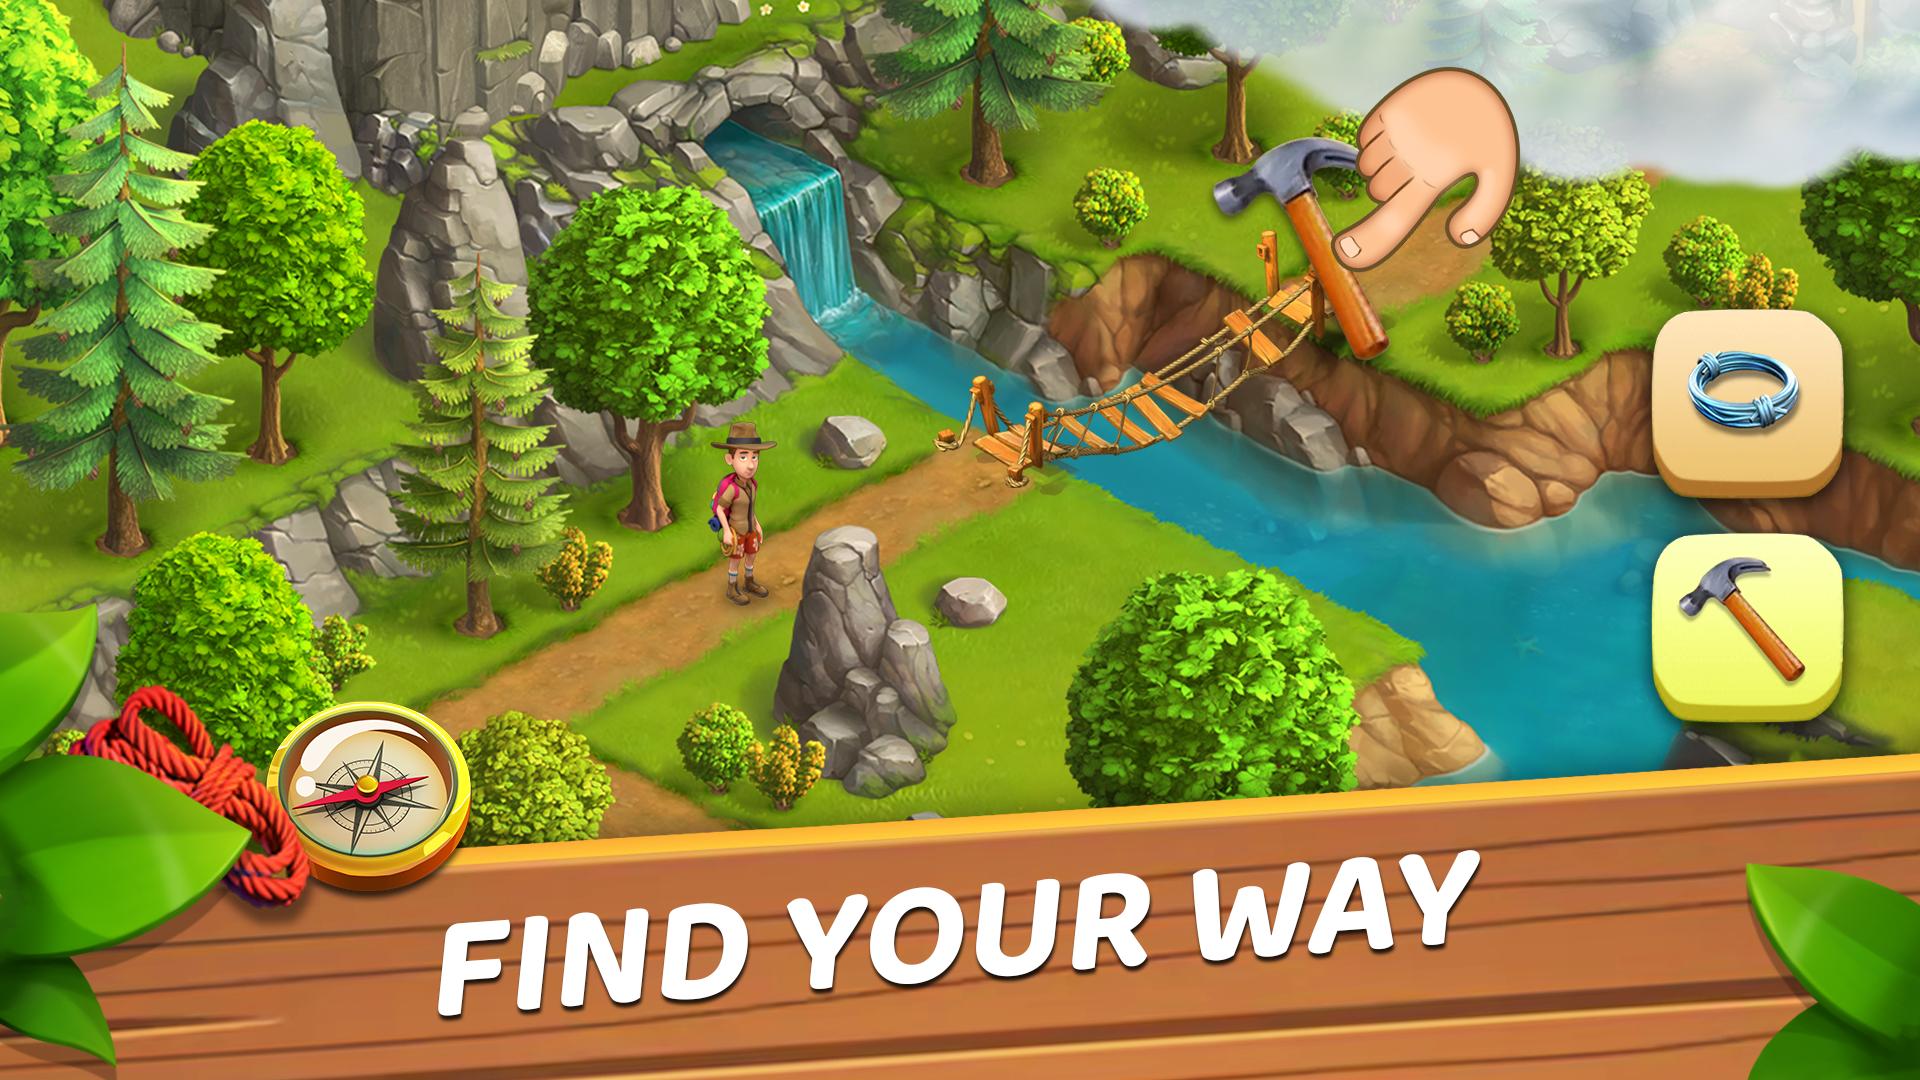 Funky Bay Farm & Adventure game 42.0.33 Screenshot 17